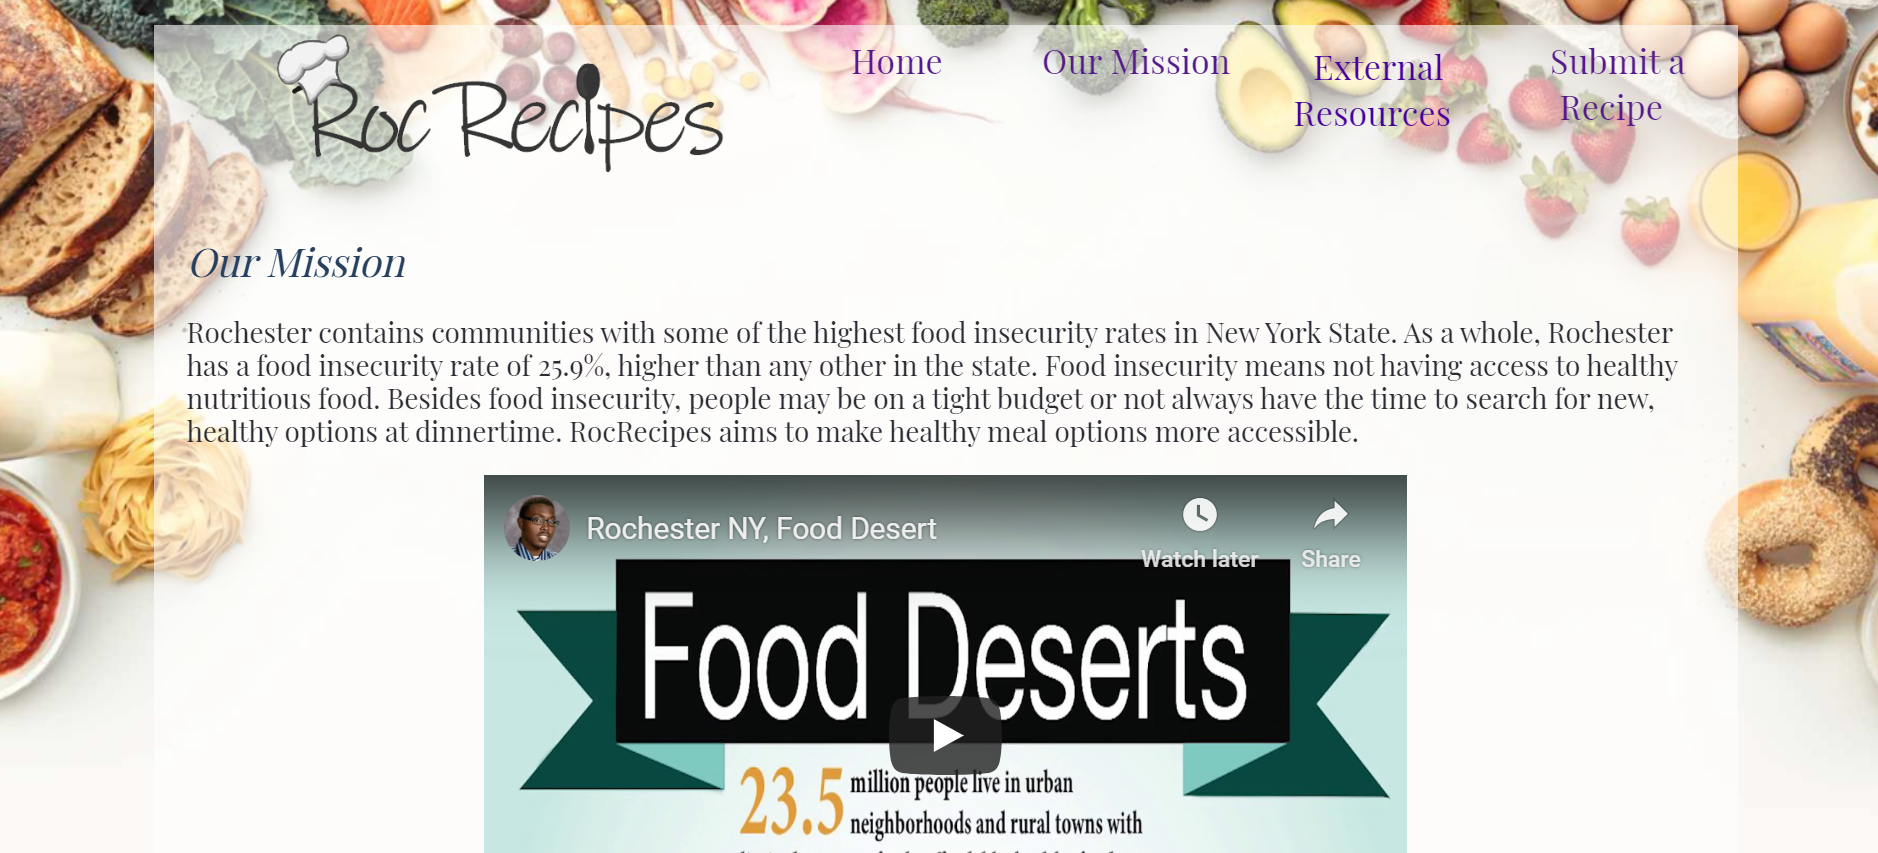 Roc Recipes Website Repository